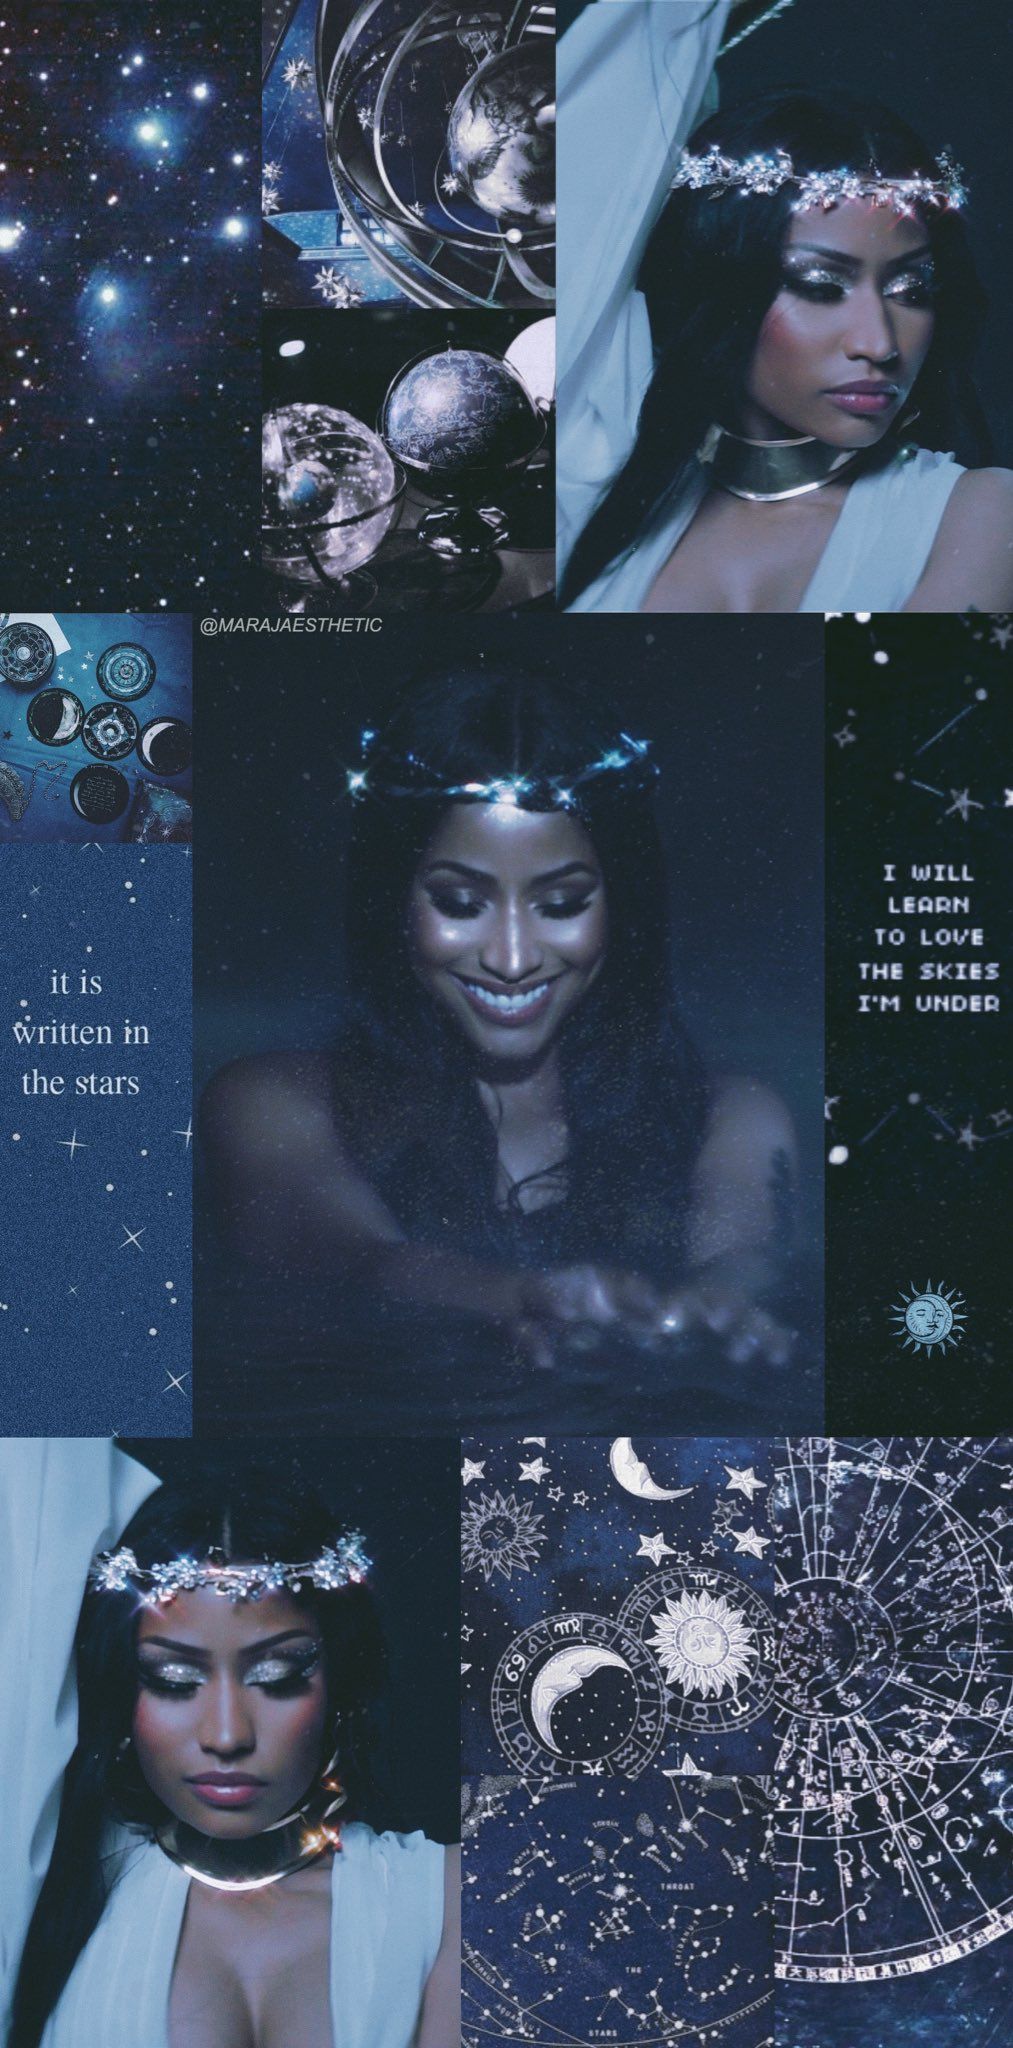 Nicki Minaj blue Wallpaper. Nicki minaj wallpaper, Bad girl wallpaper, iPhone wallpaper tumblr aesthetic